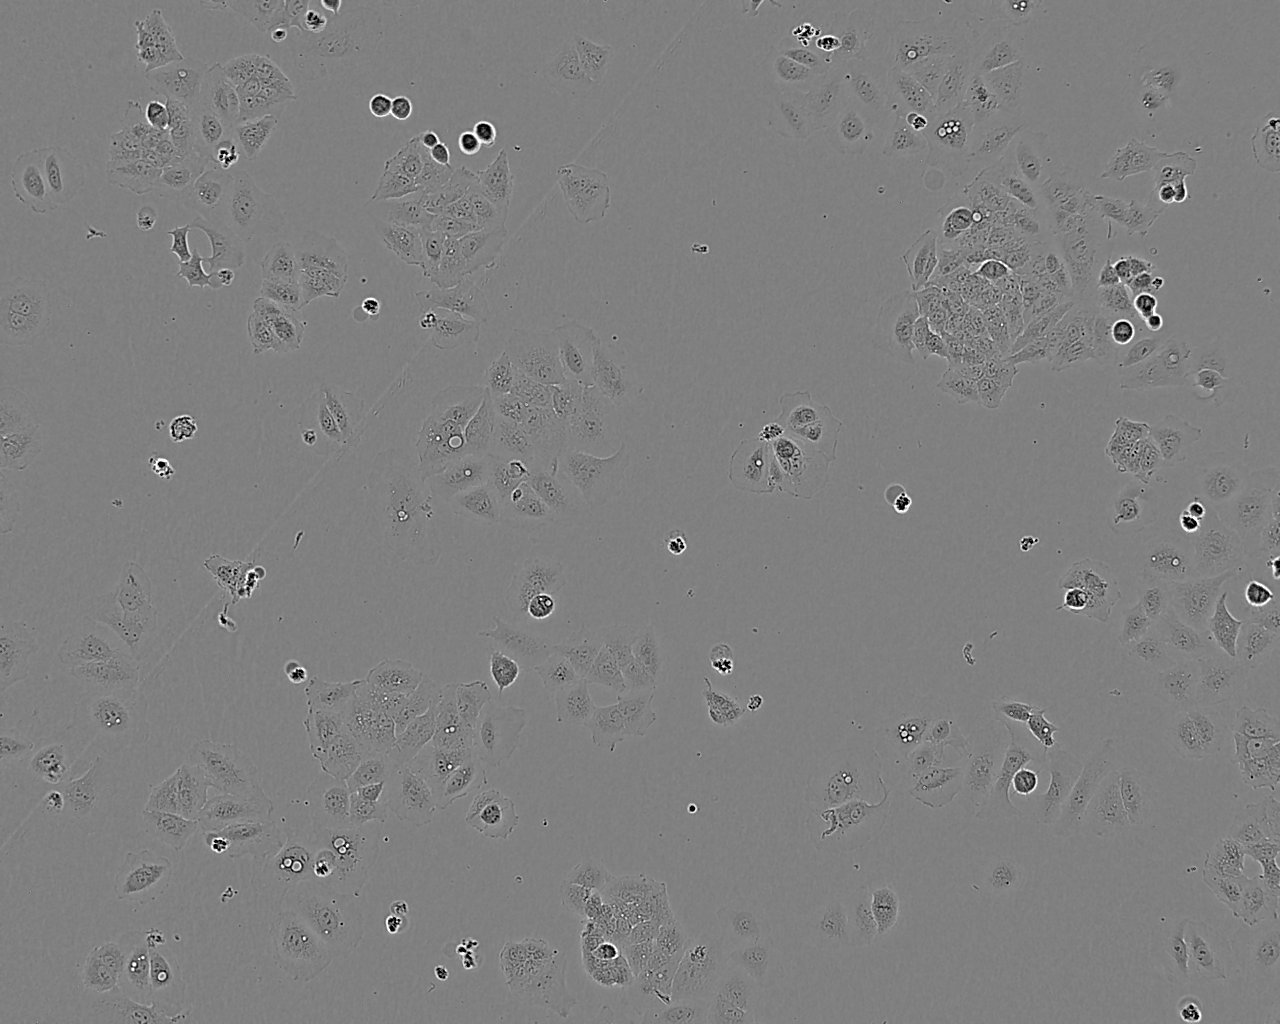 HCEC-B4G12 epithelioid cells人角膜内皮细胞系,HCEC-B4G12 epithelioid cells